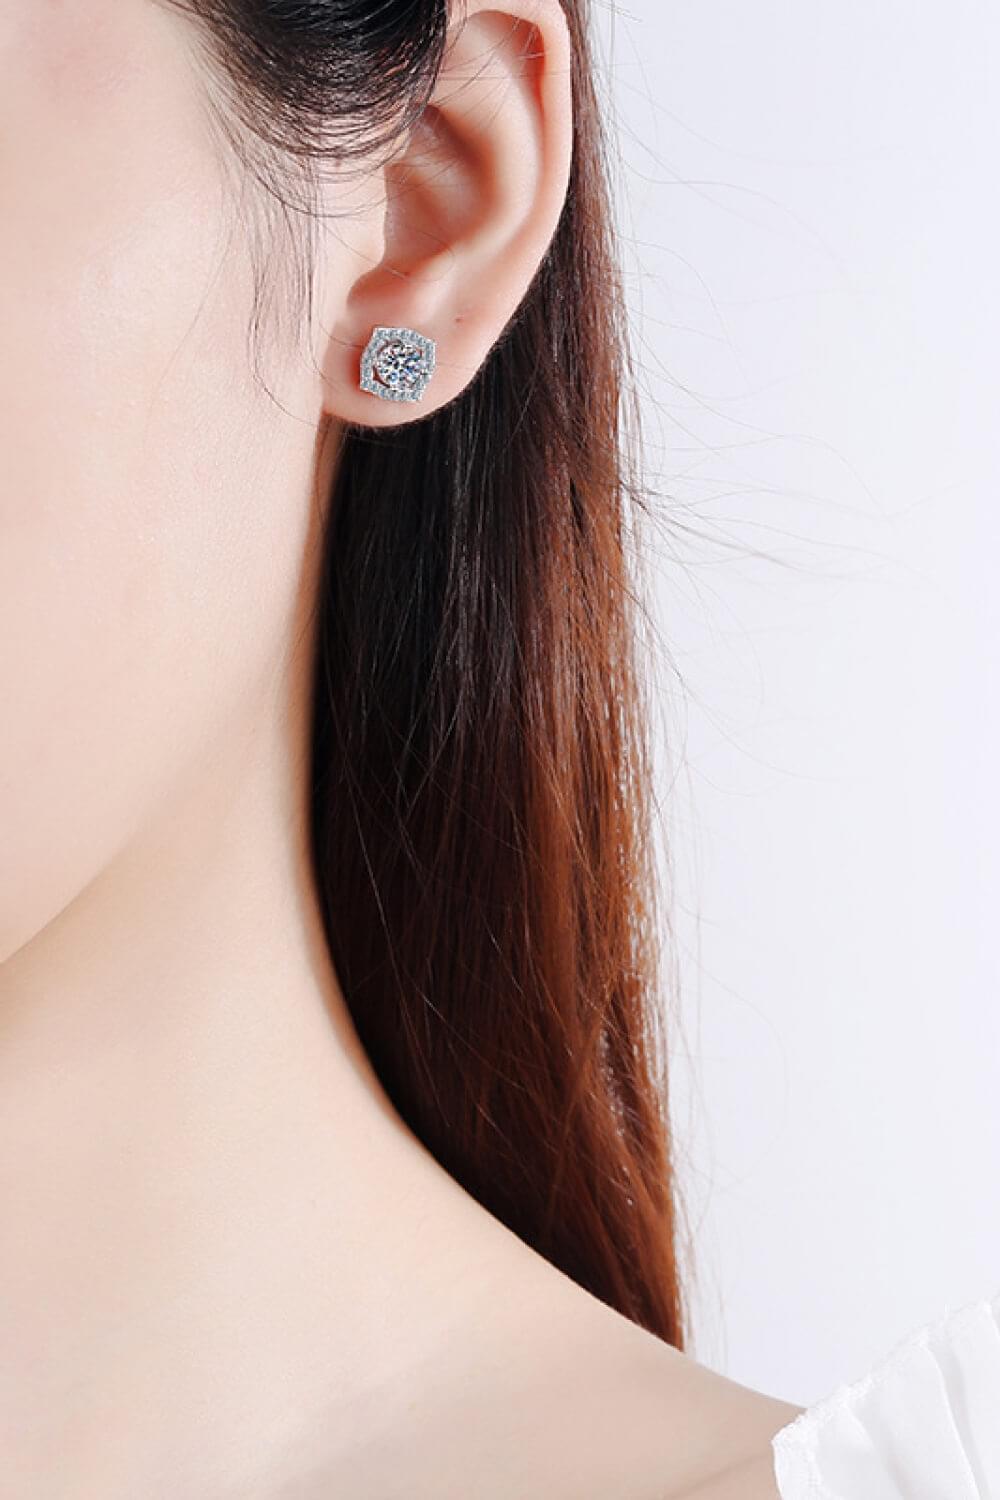 1 Carat Moissanite Geometric Stud Earrings - Earrings - FITGGINS